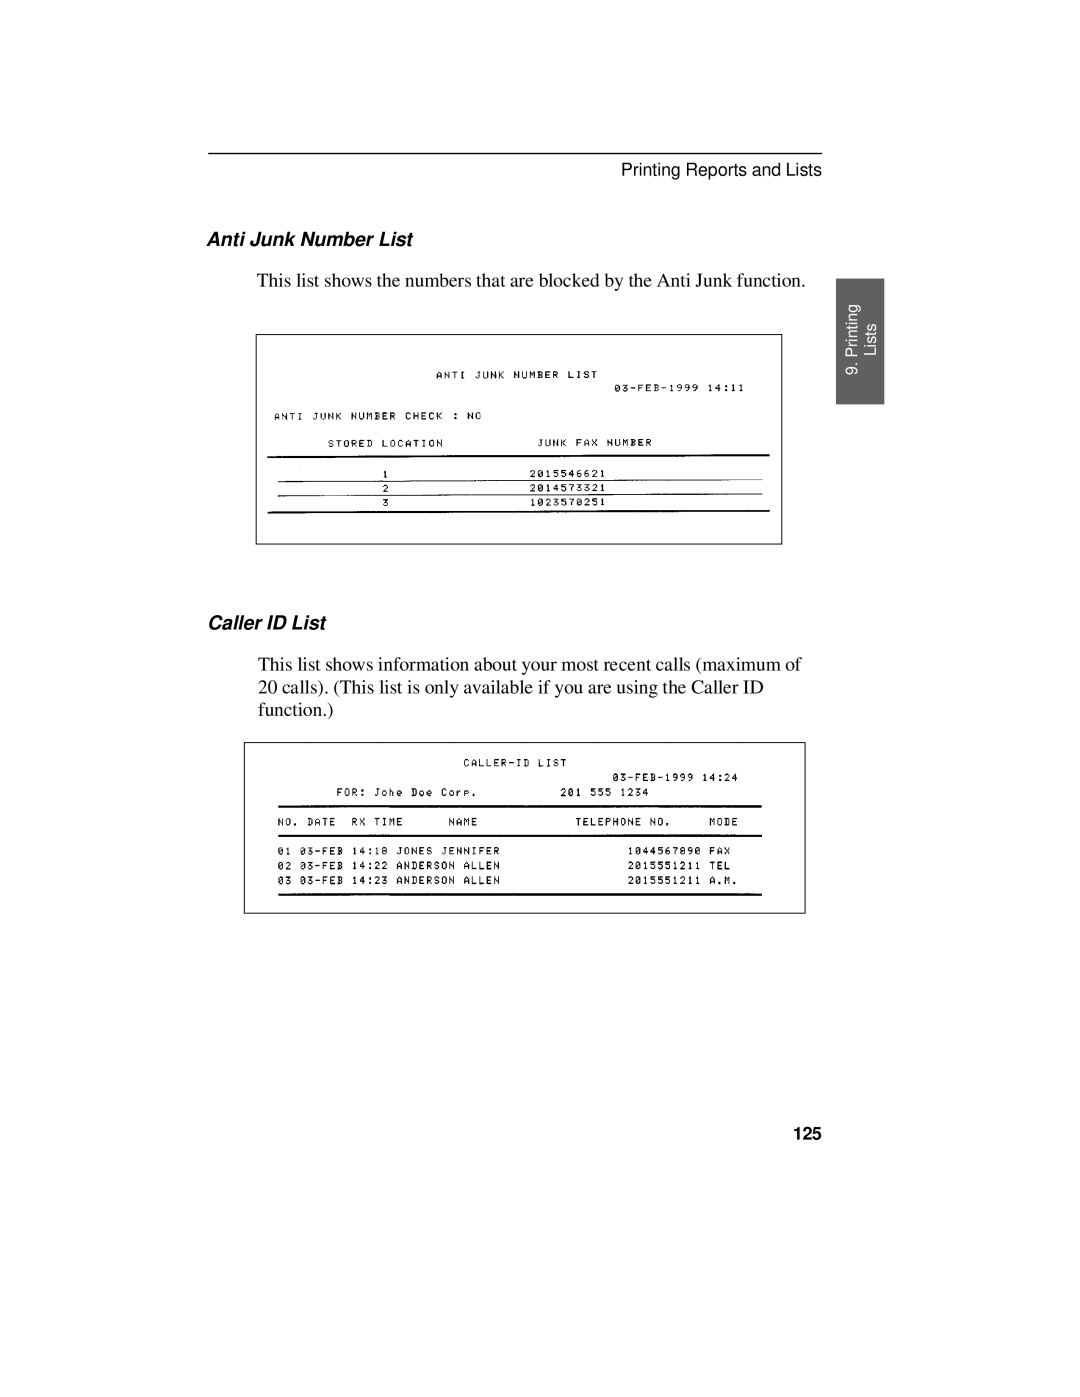 Sharp UX-470 operation manual Anti Junk Number List, Caller ID List, 125 